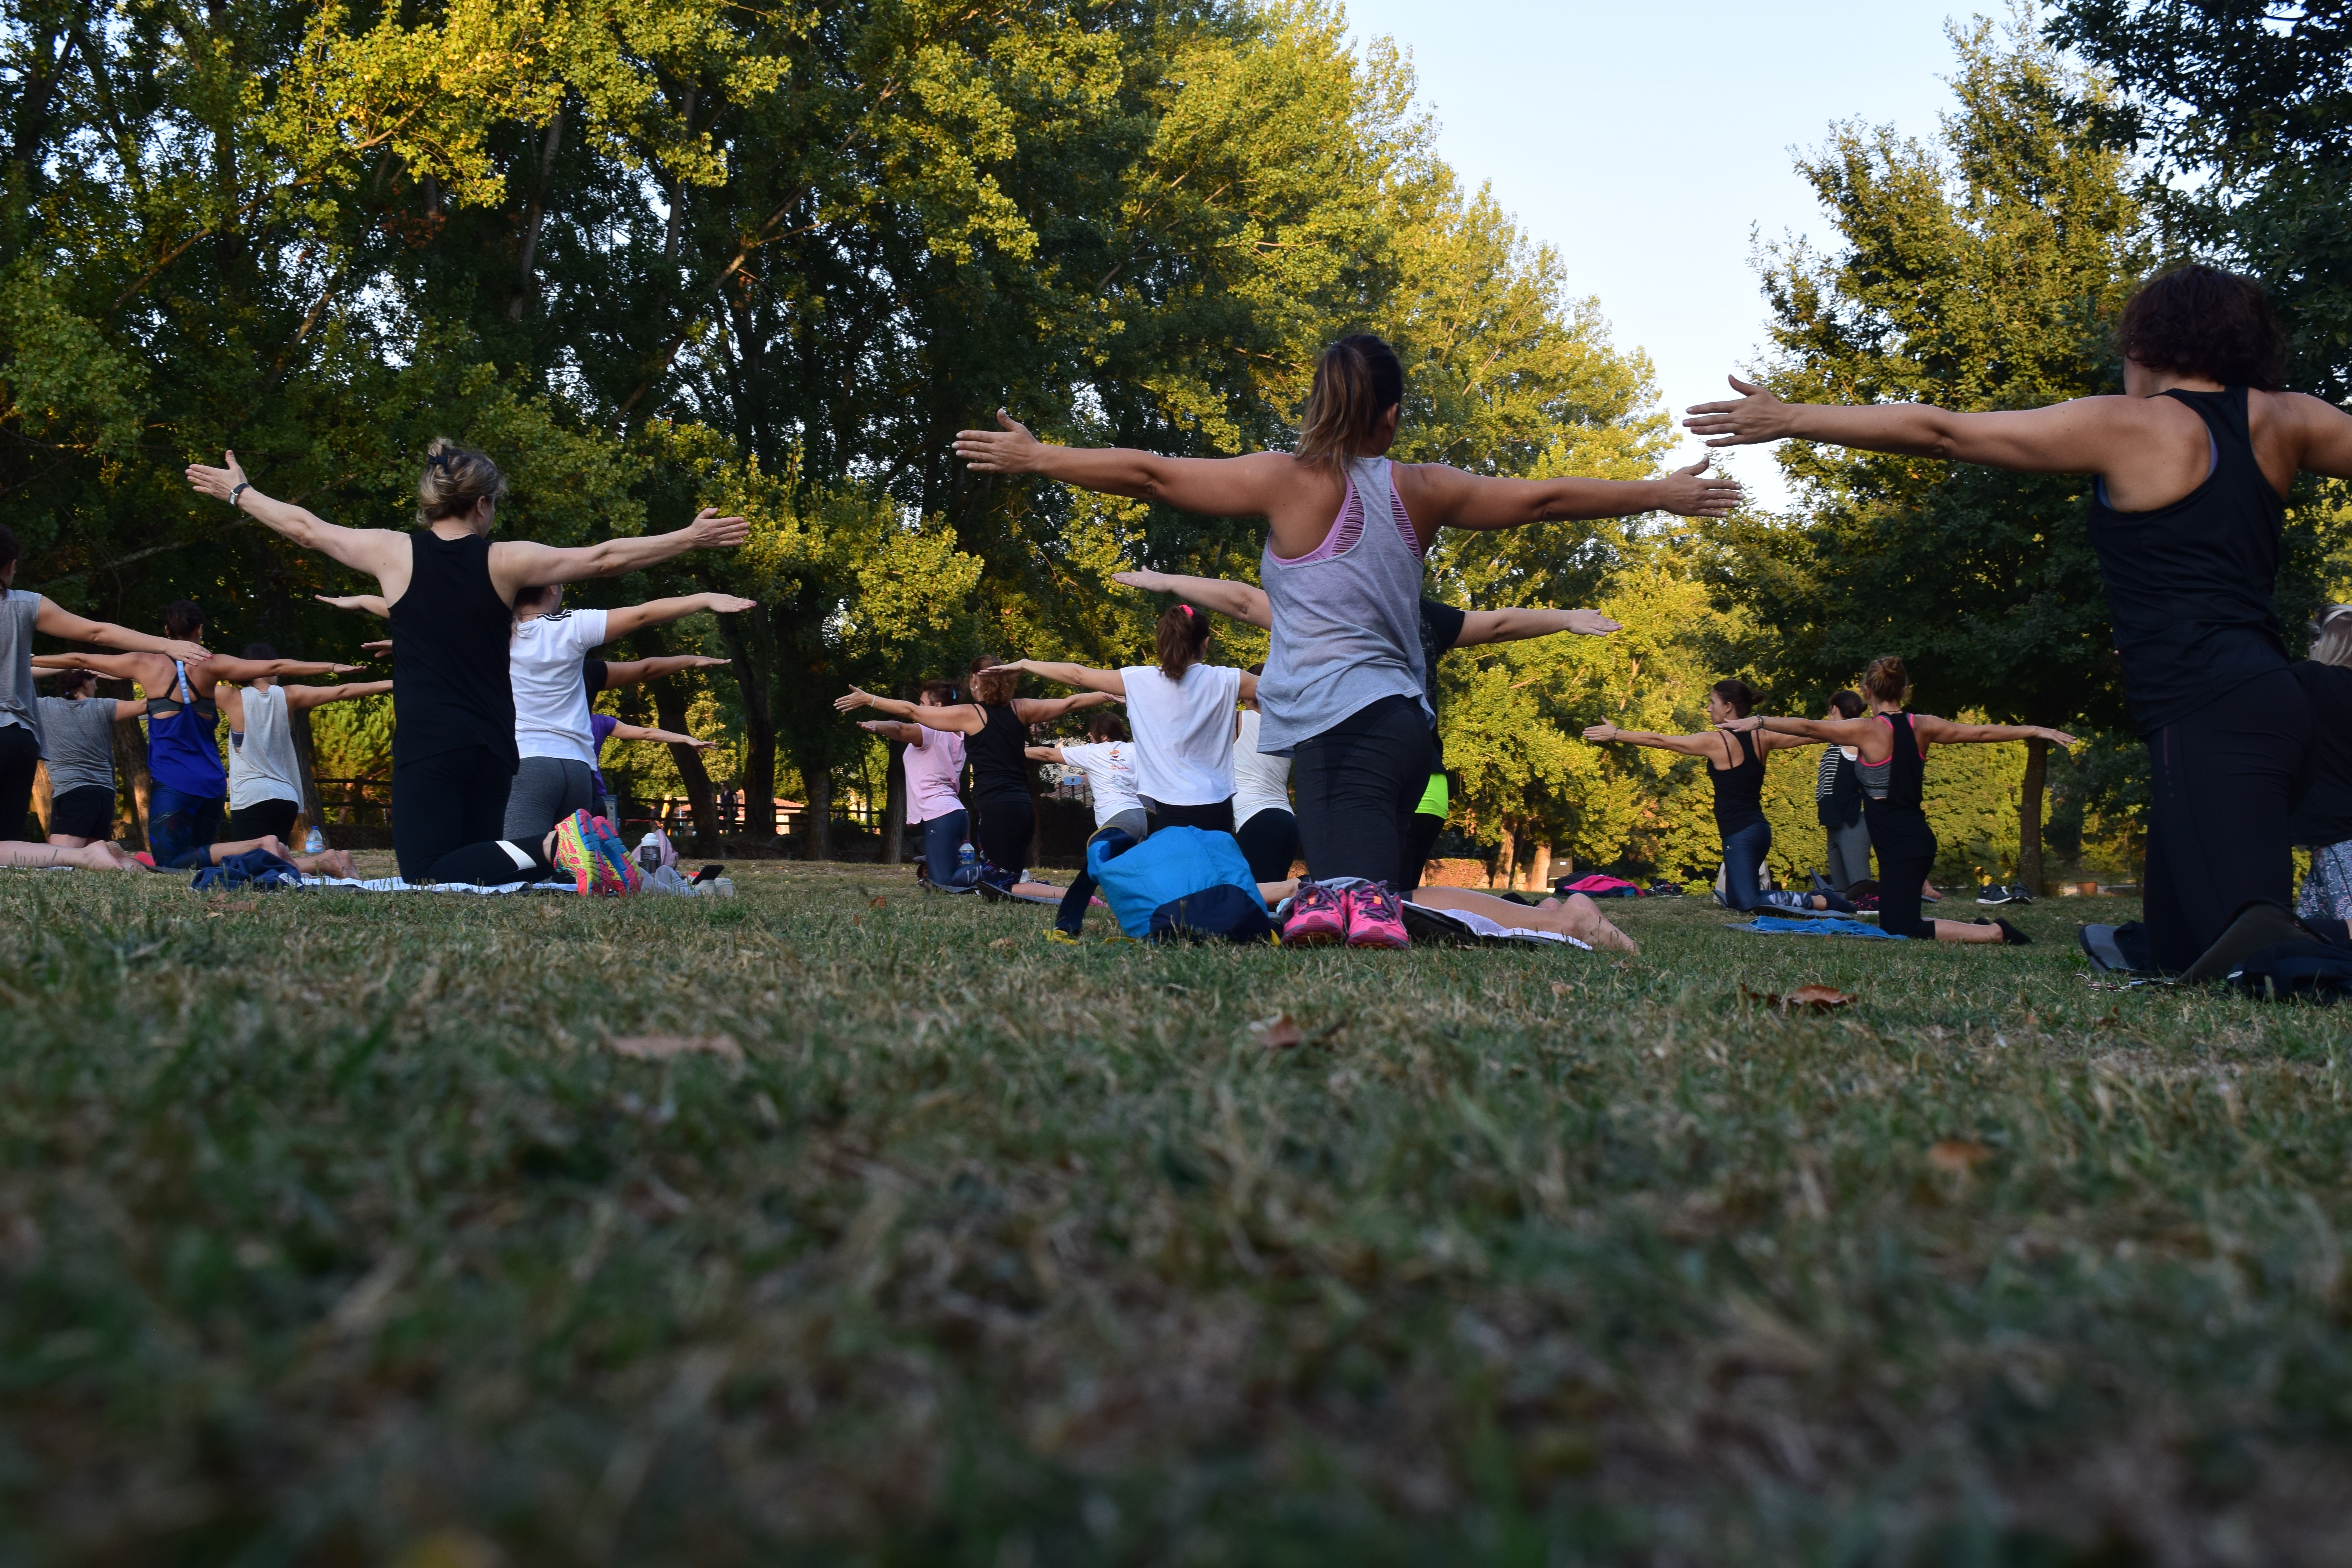 People doing yoga on grass